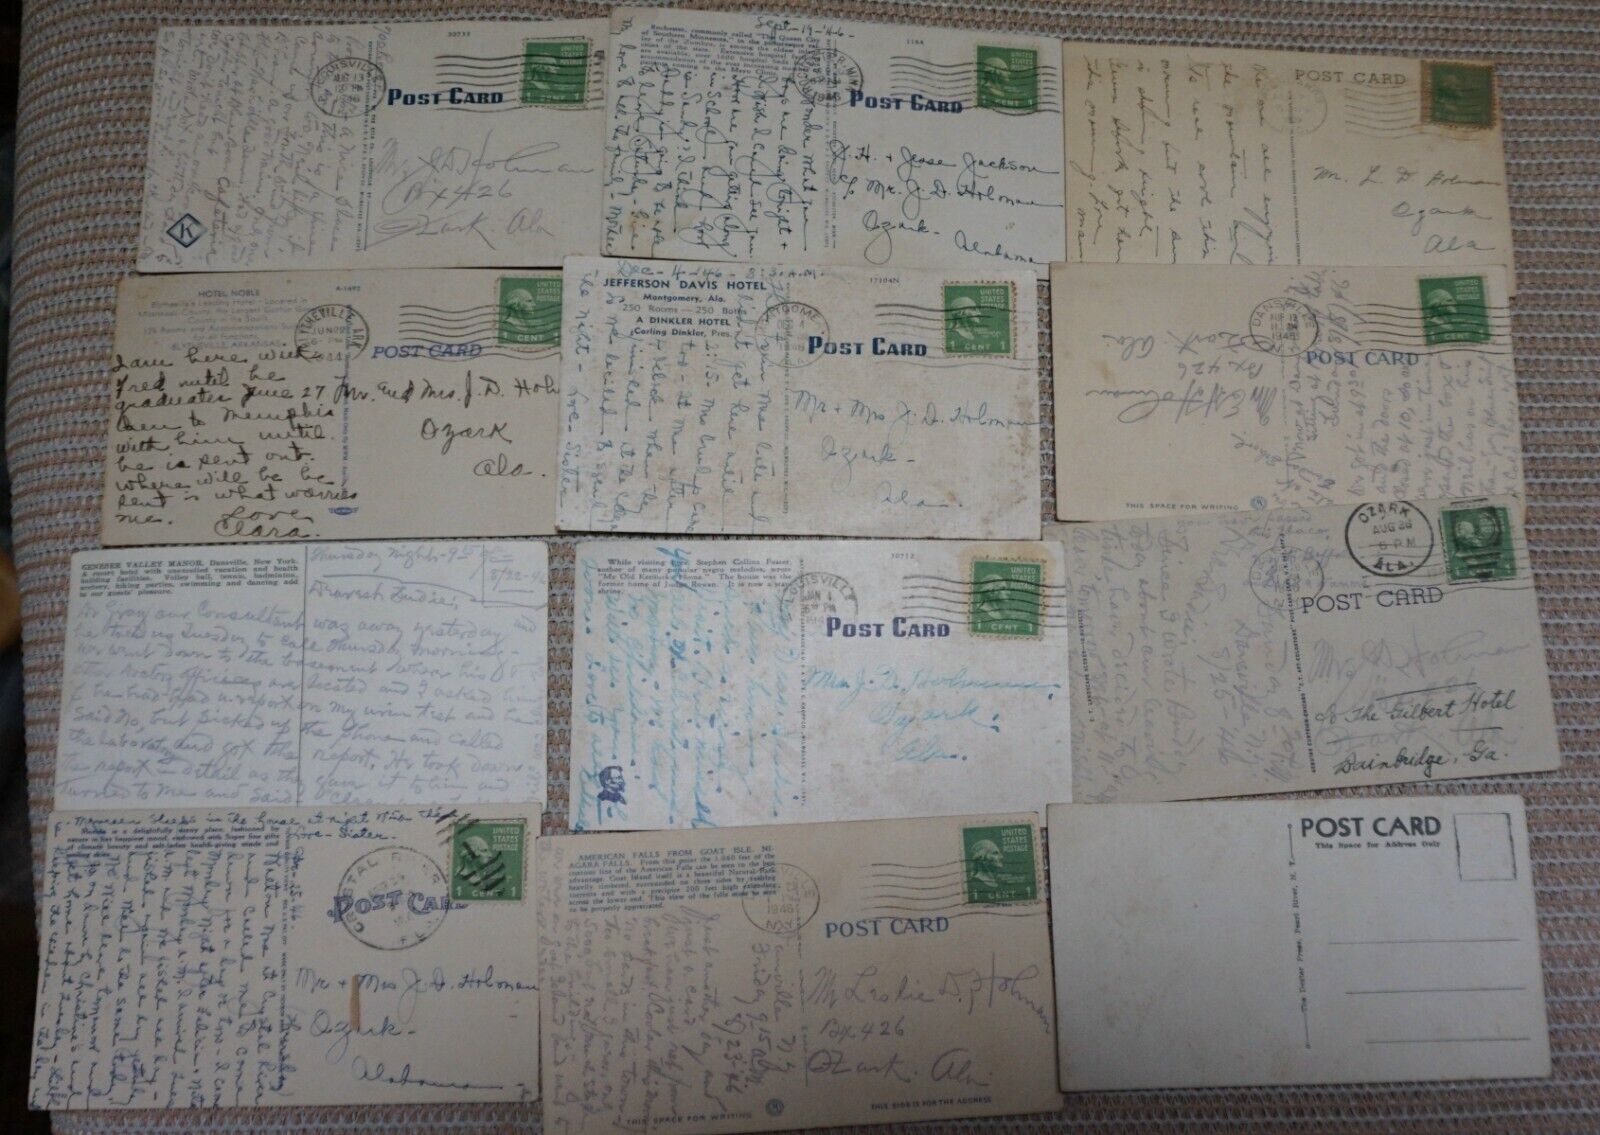 Group of postcards from Ozark, AL one cool photo card. (loc = E4 tan bin)